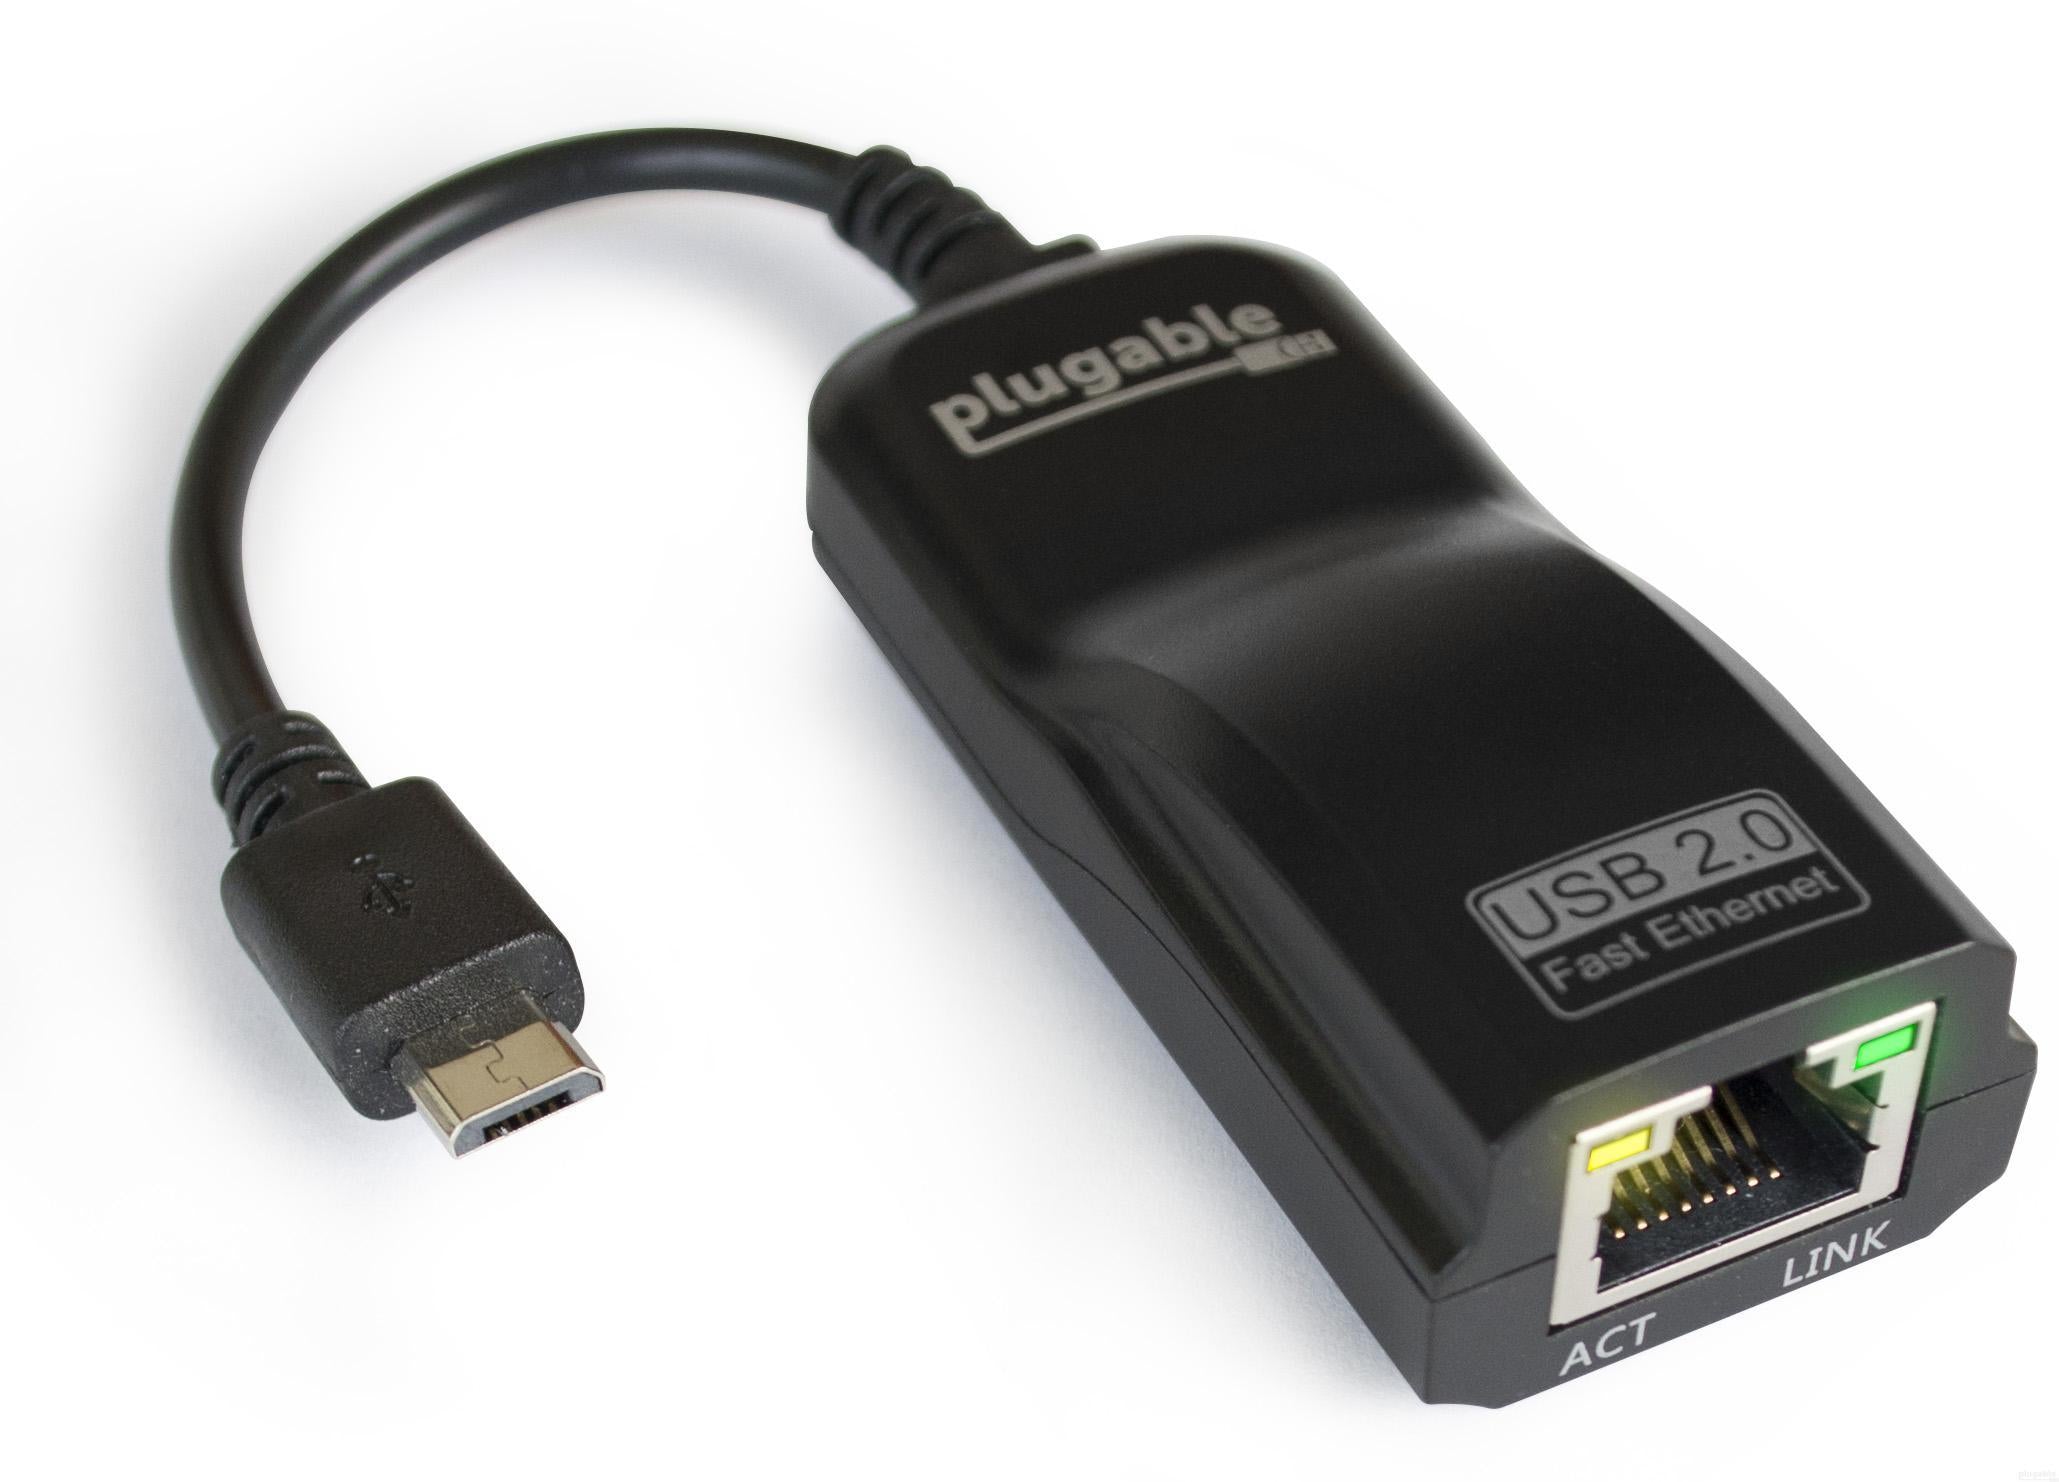 USB 2.0 Micro-B to 10/100 Ethernet Adapter Plugable Technologies